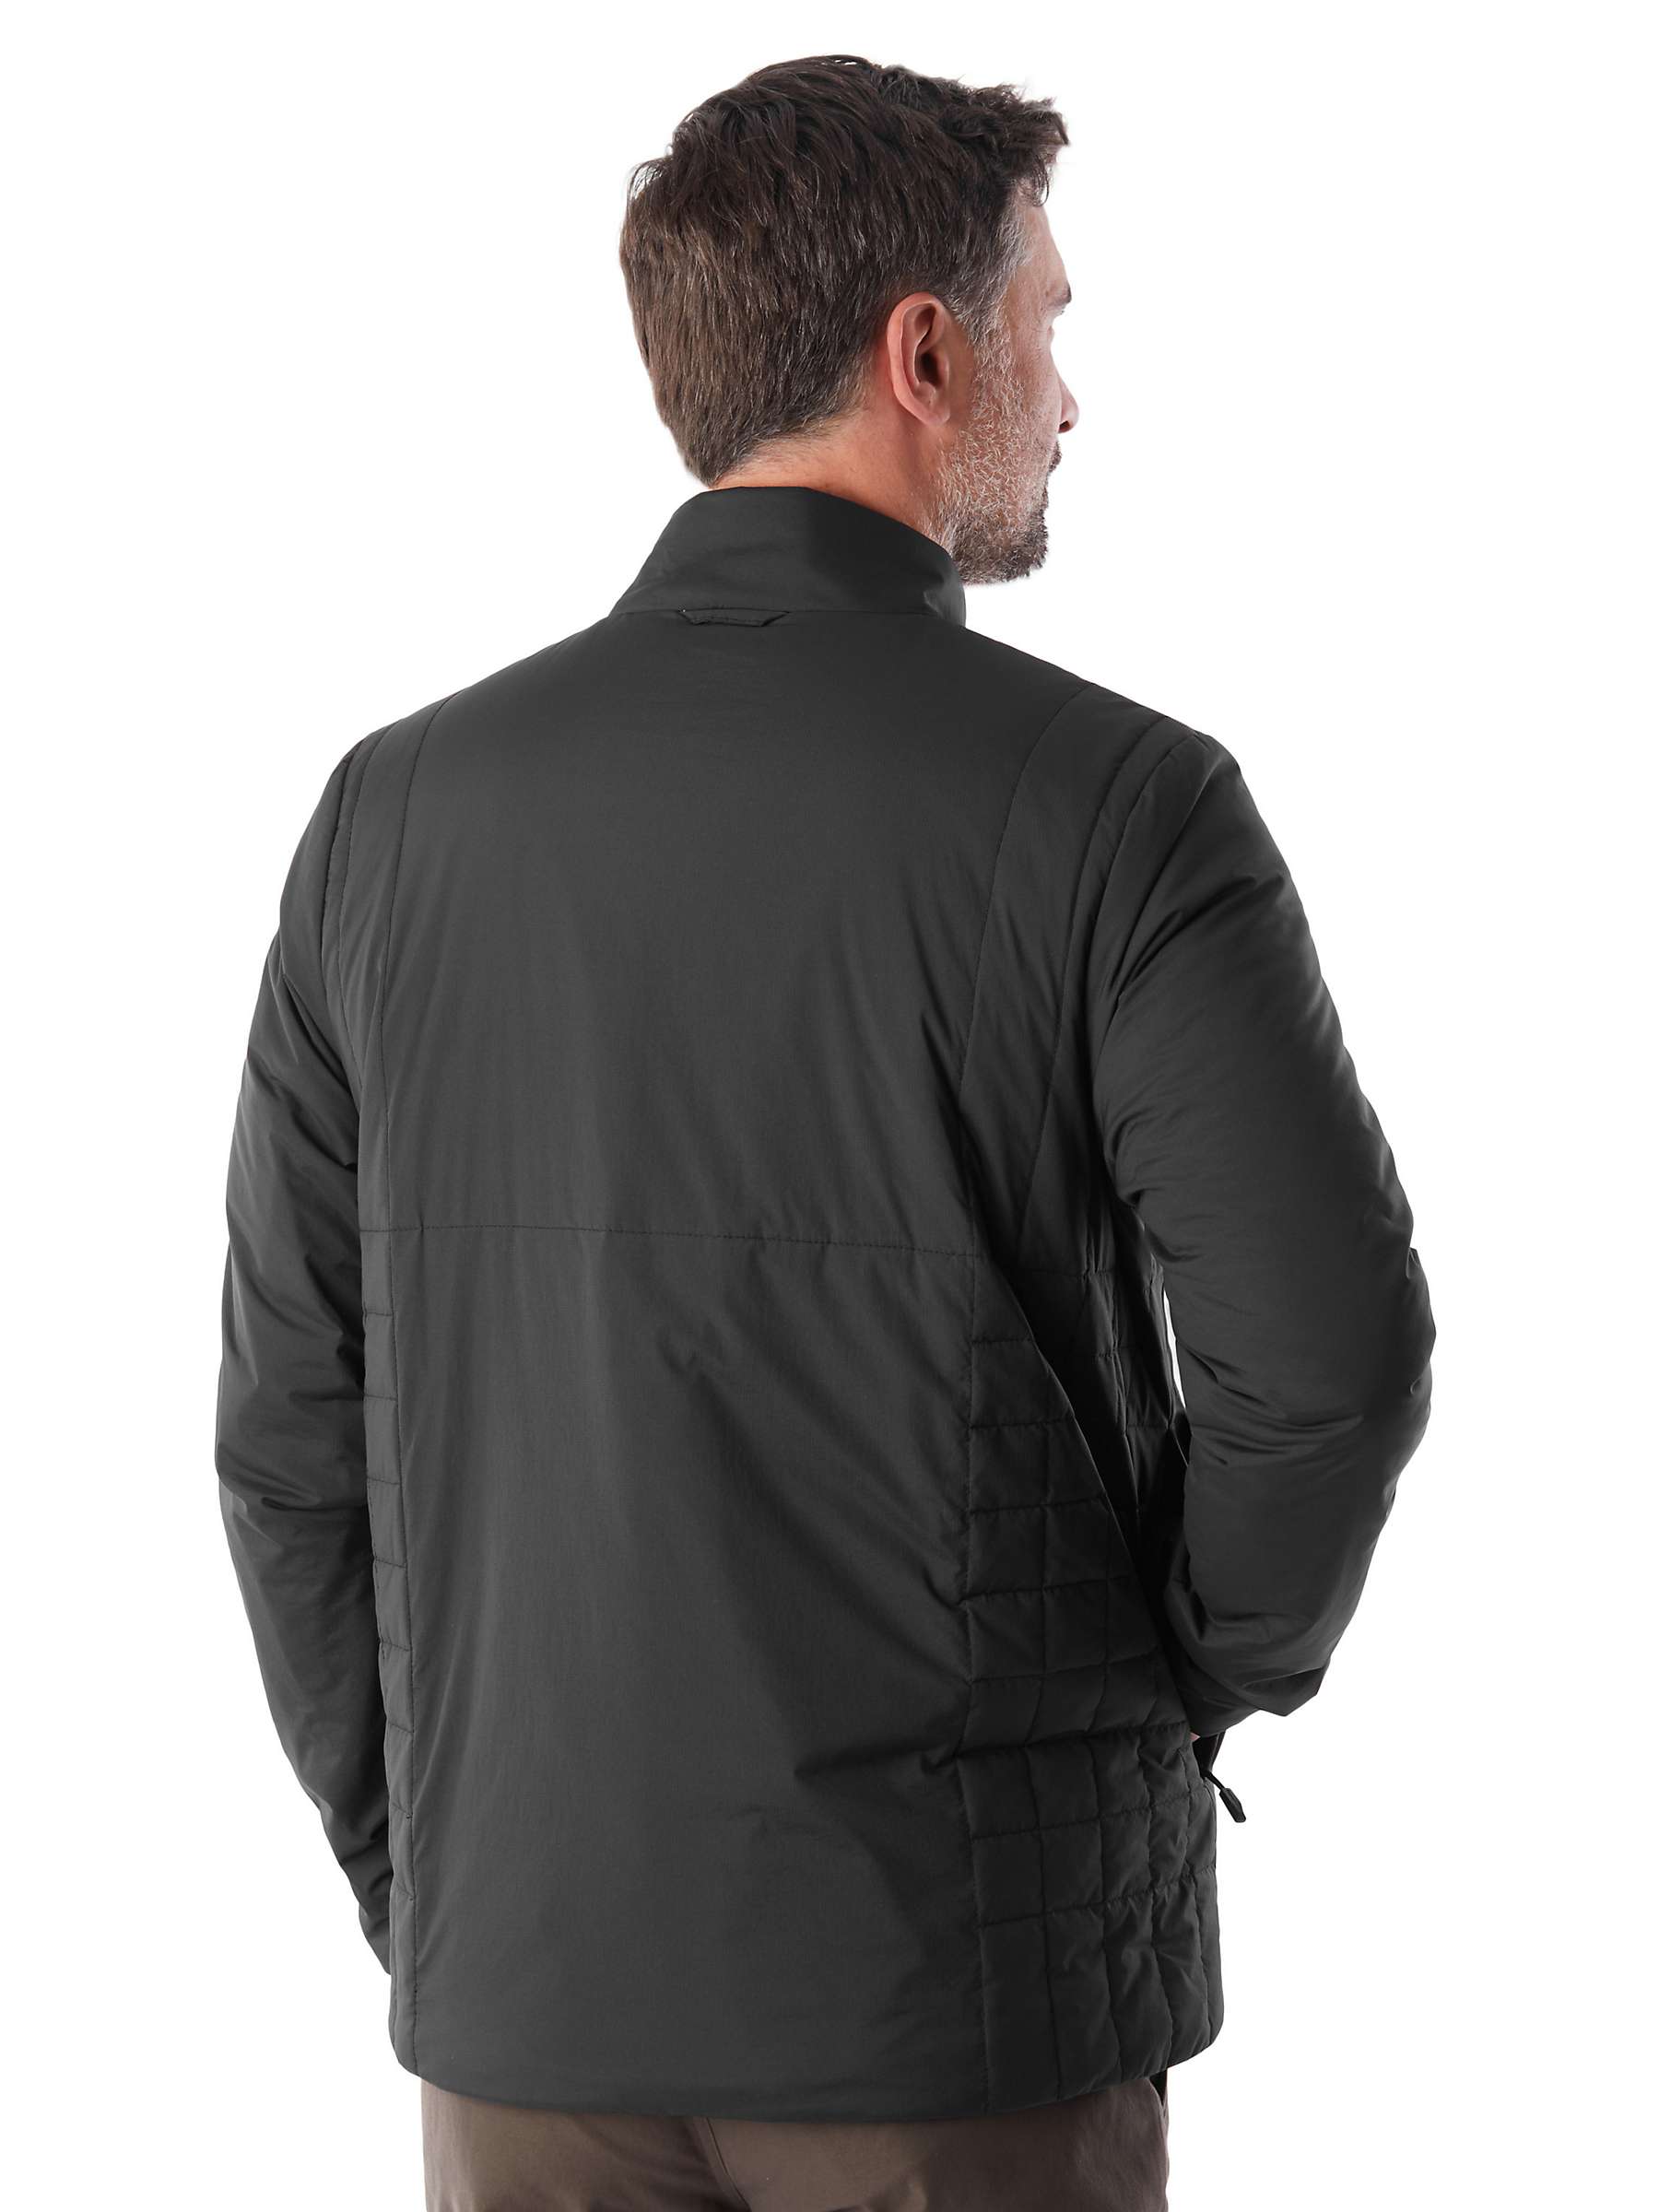 Rohan Rime Men's Insulated Jacket, Black at John Lewis & Partners